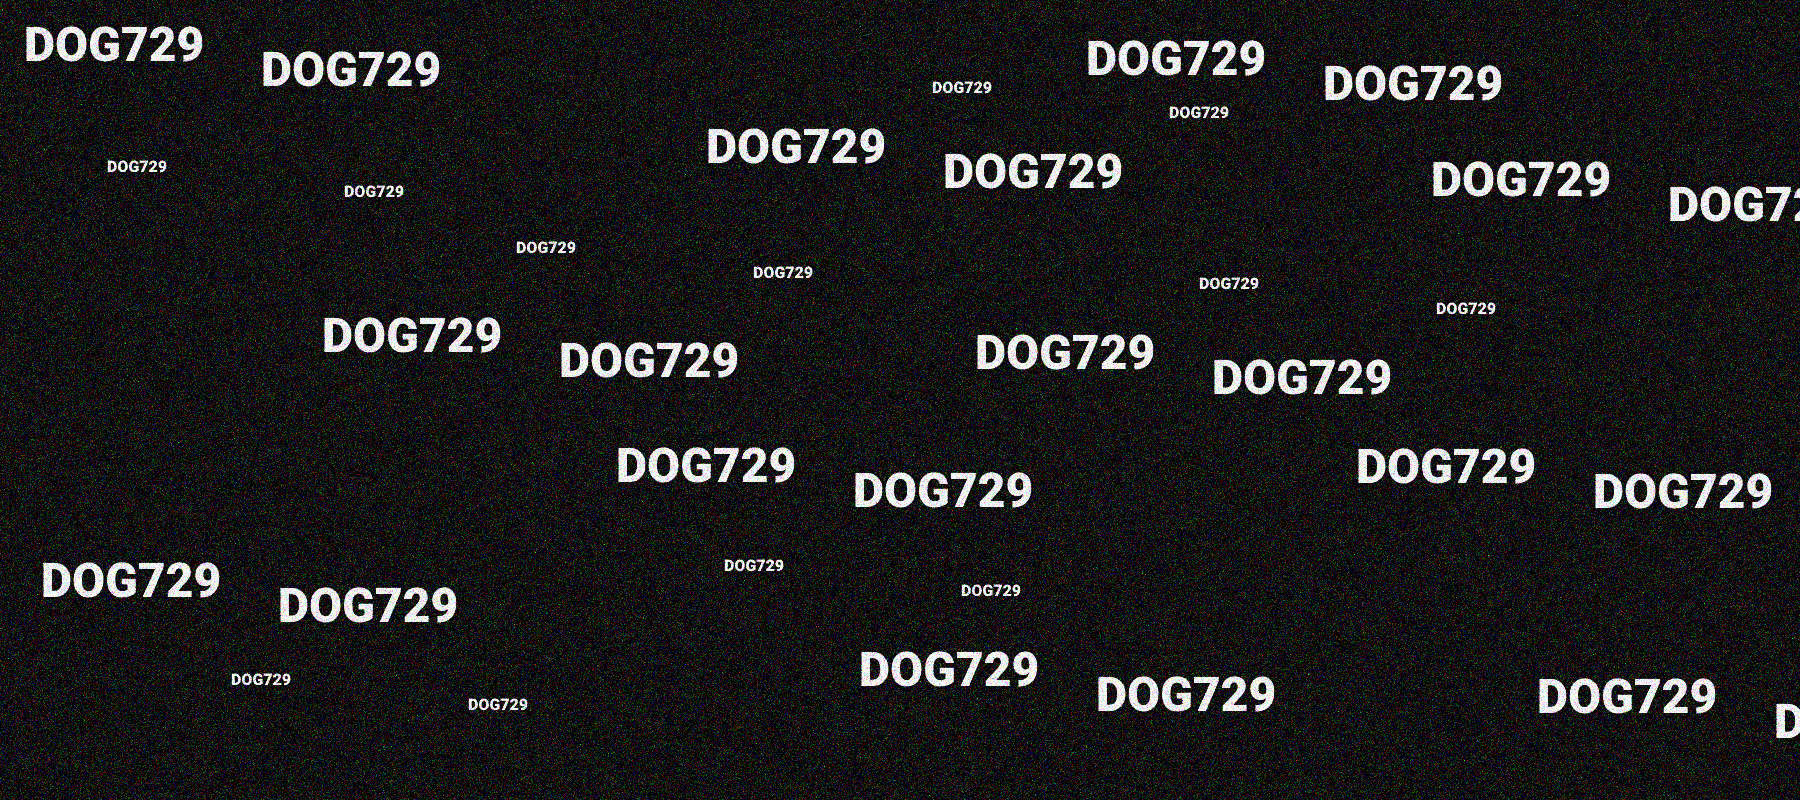 DOG729 banner